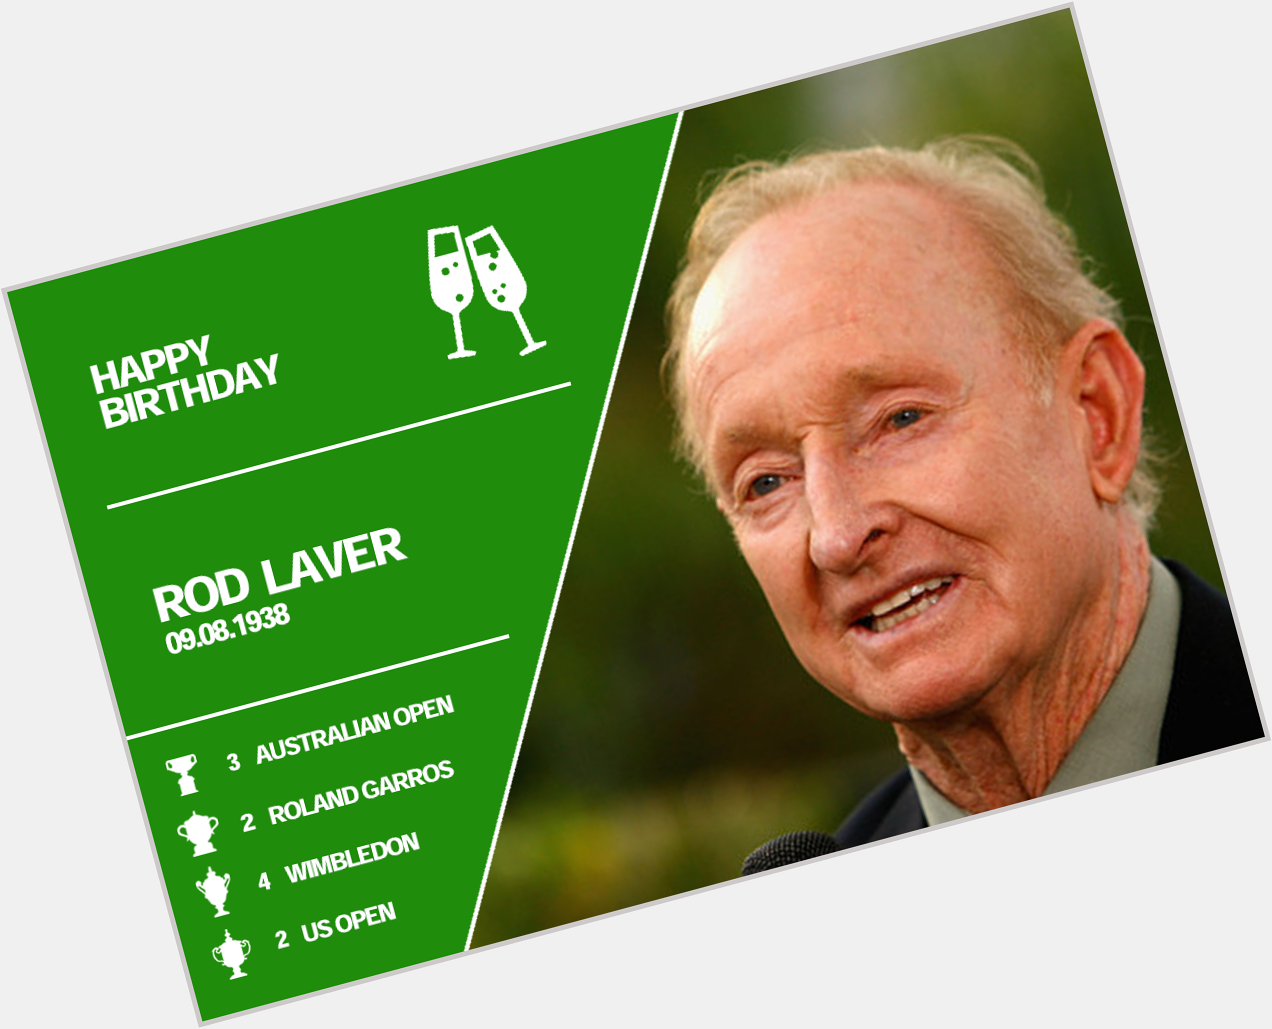 Happy Birthday Rod Laver! 